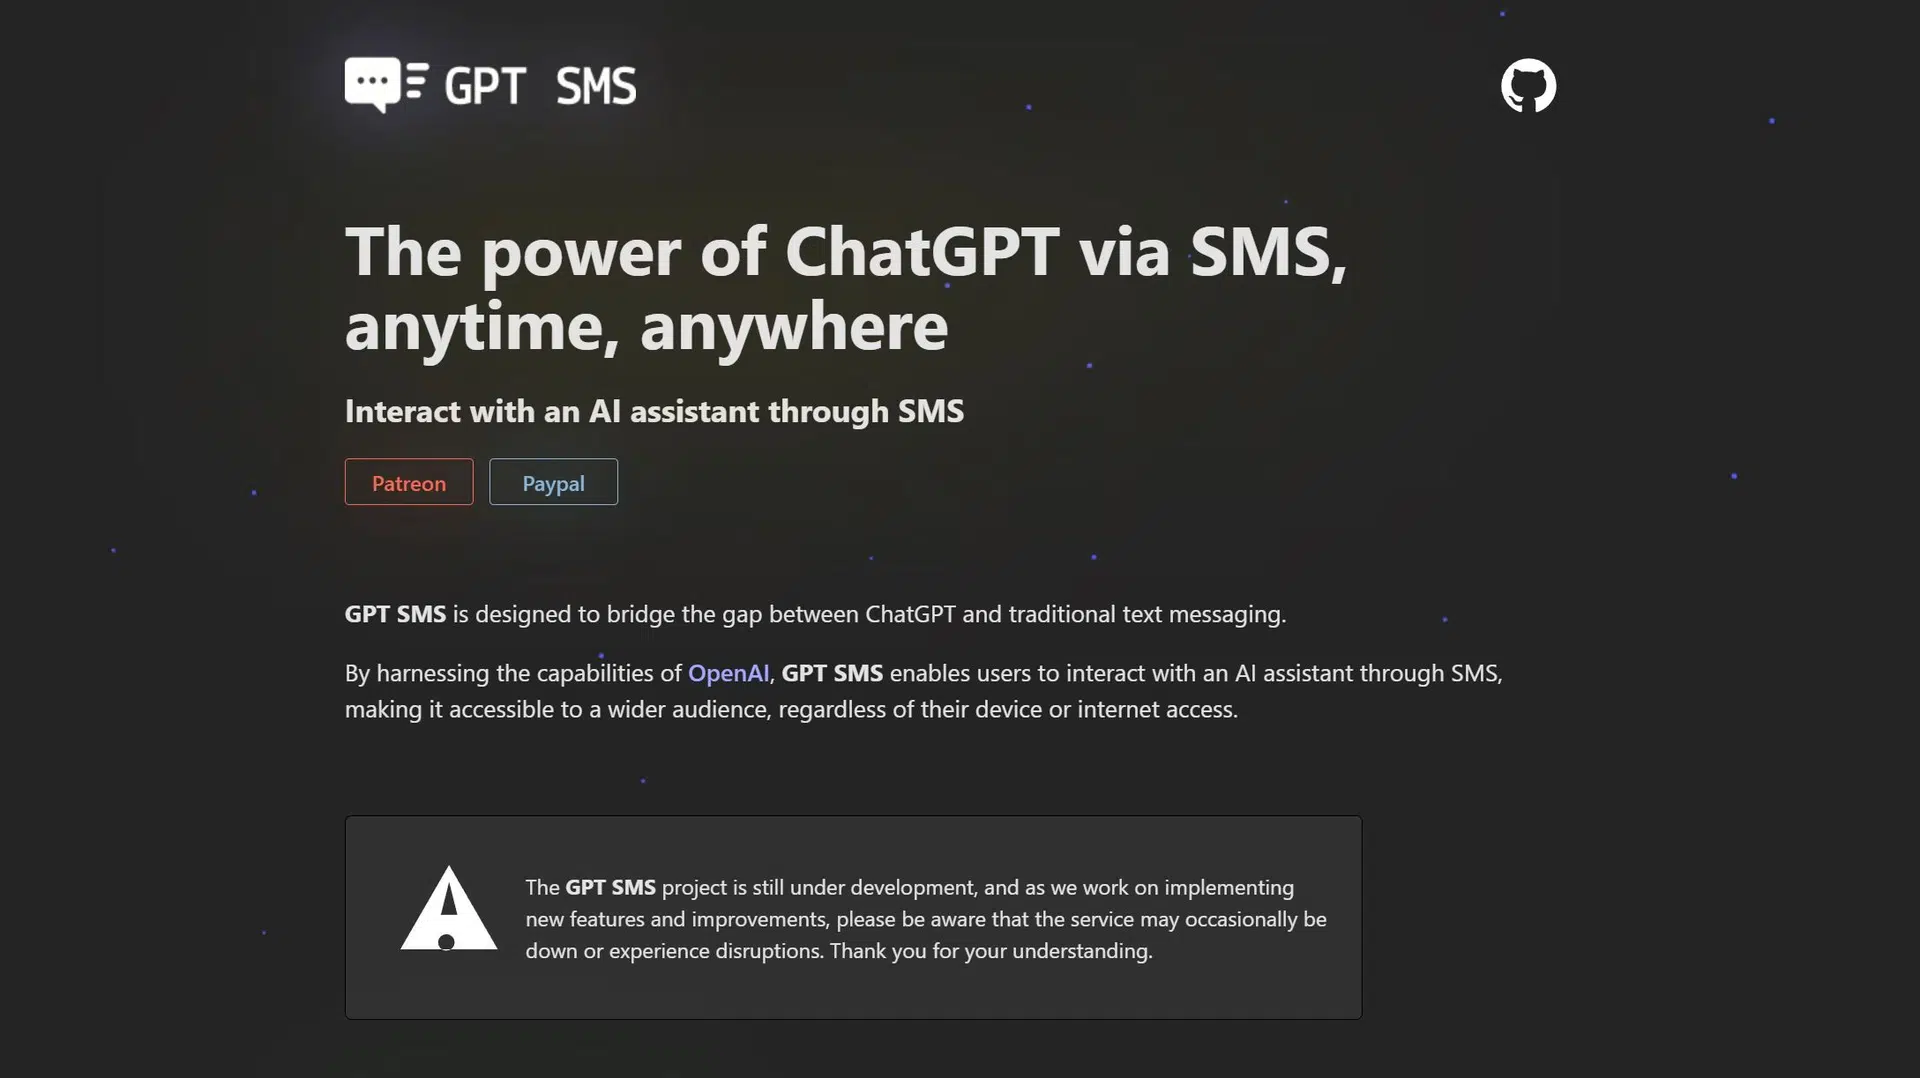 GPT SMSwebsite picture